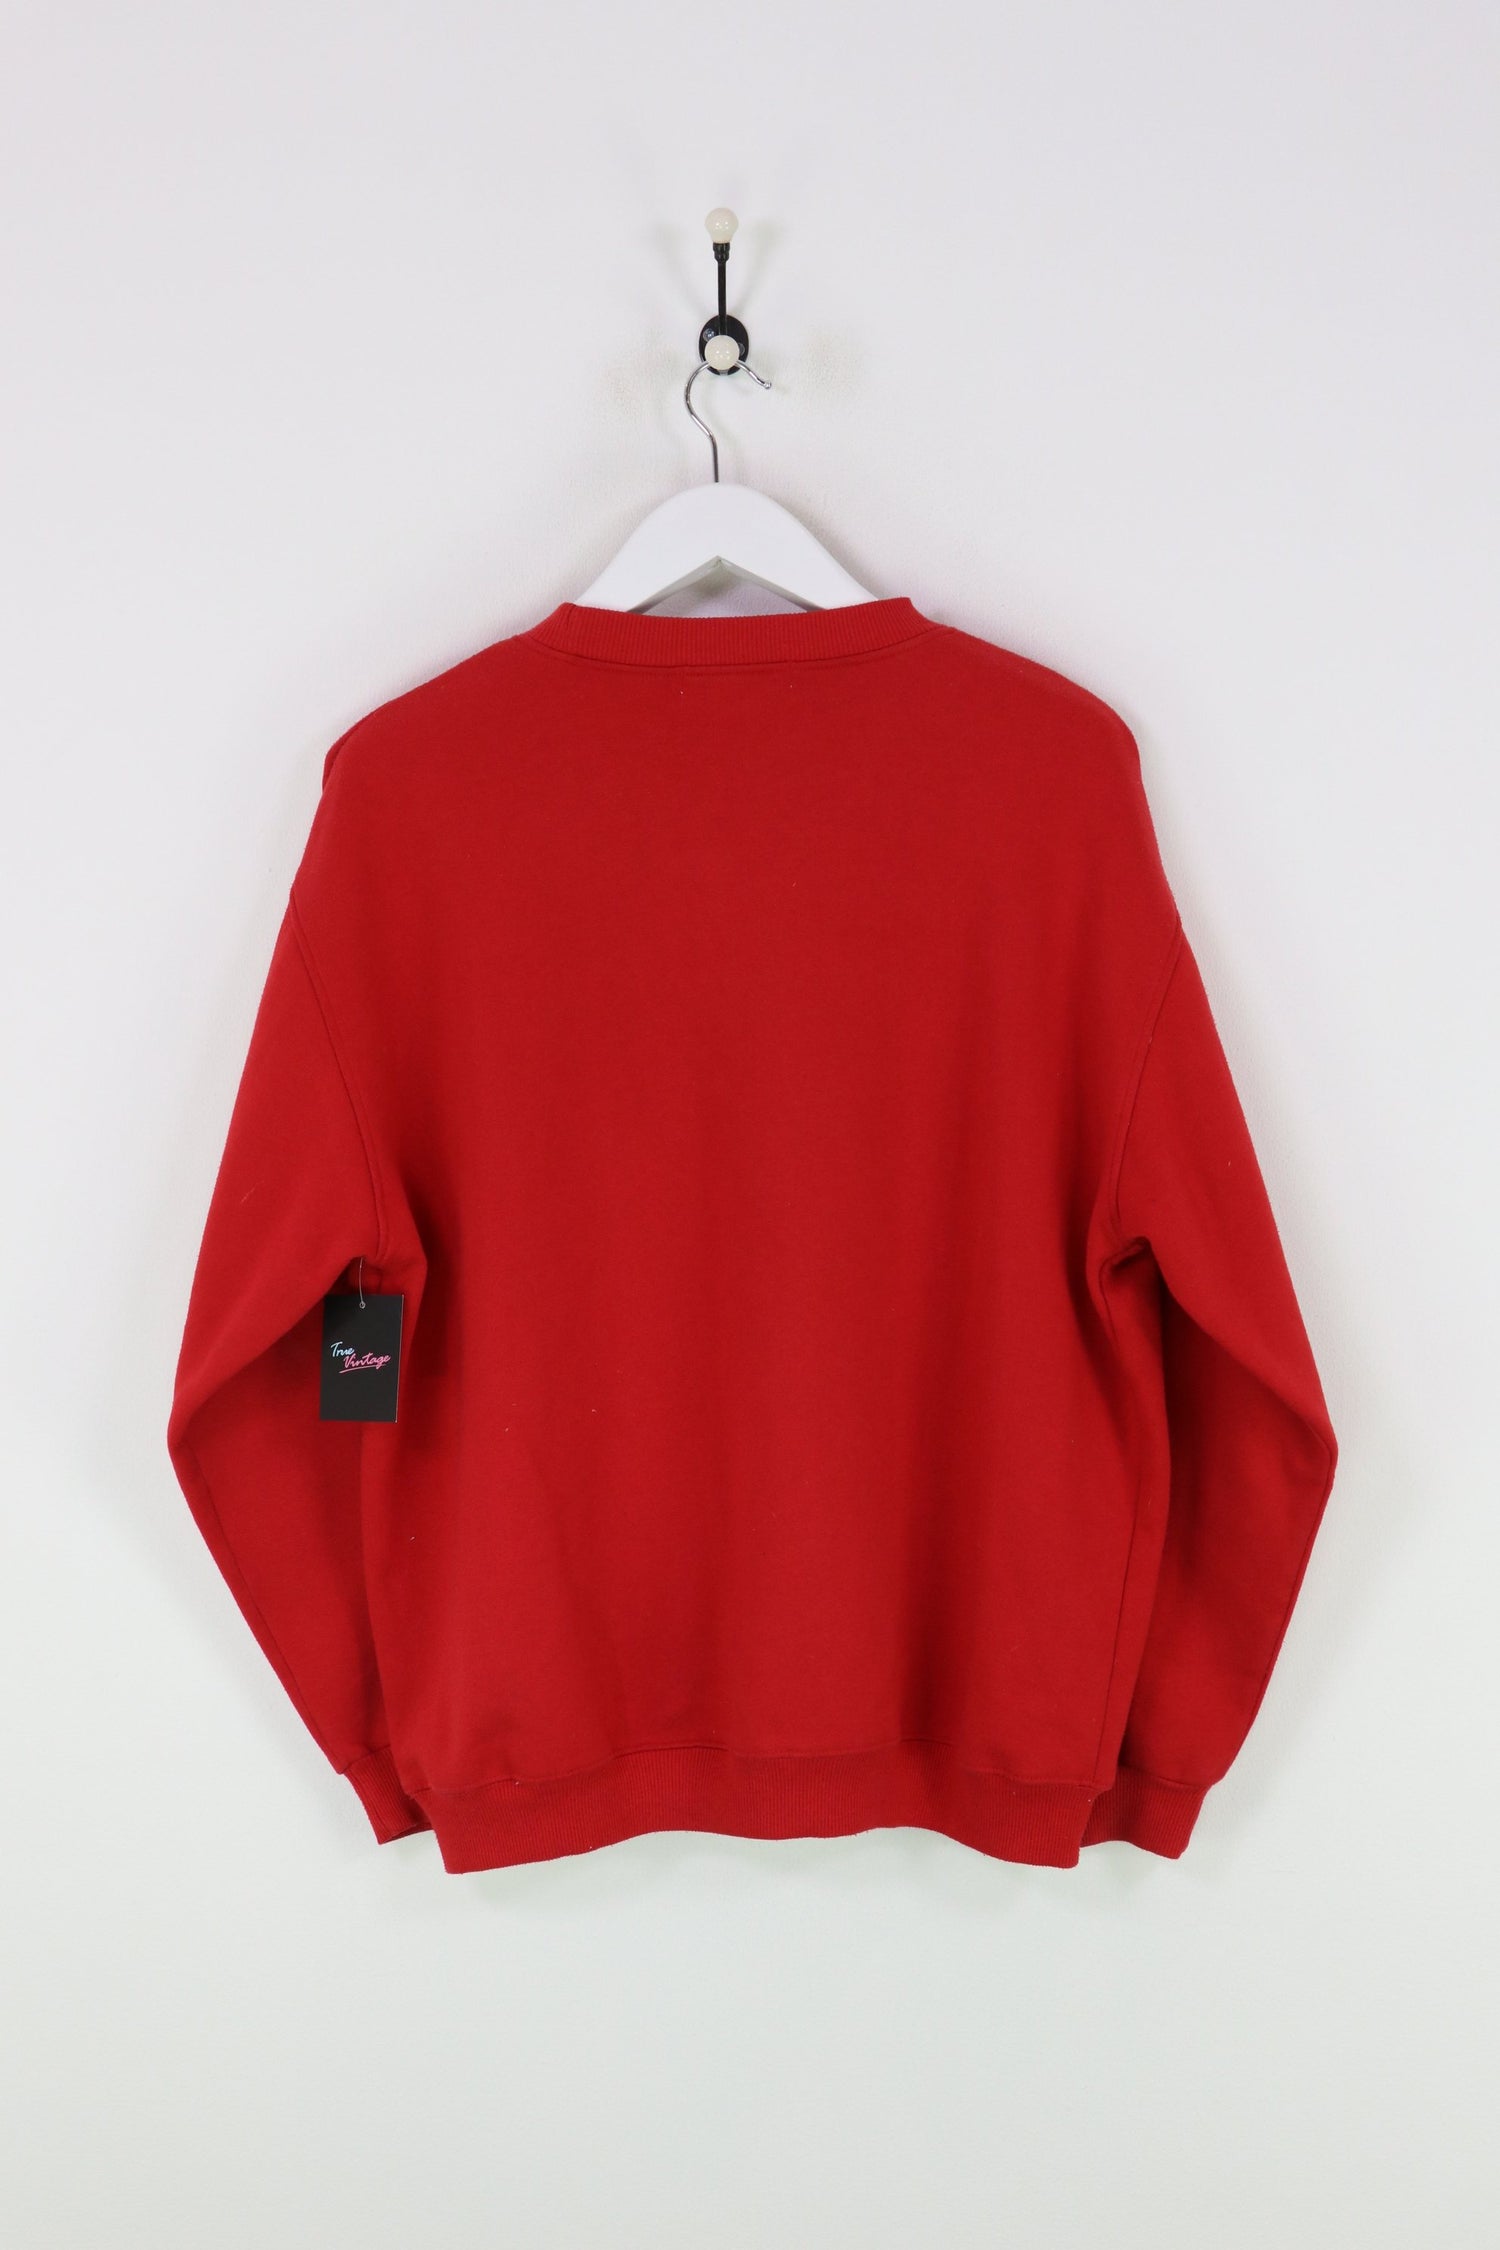 Fila Sweatshirt Red Large